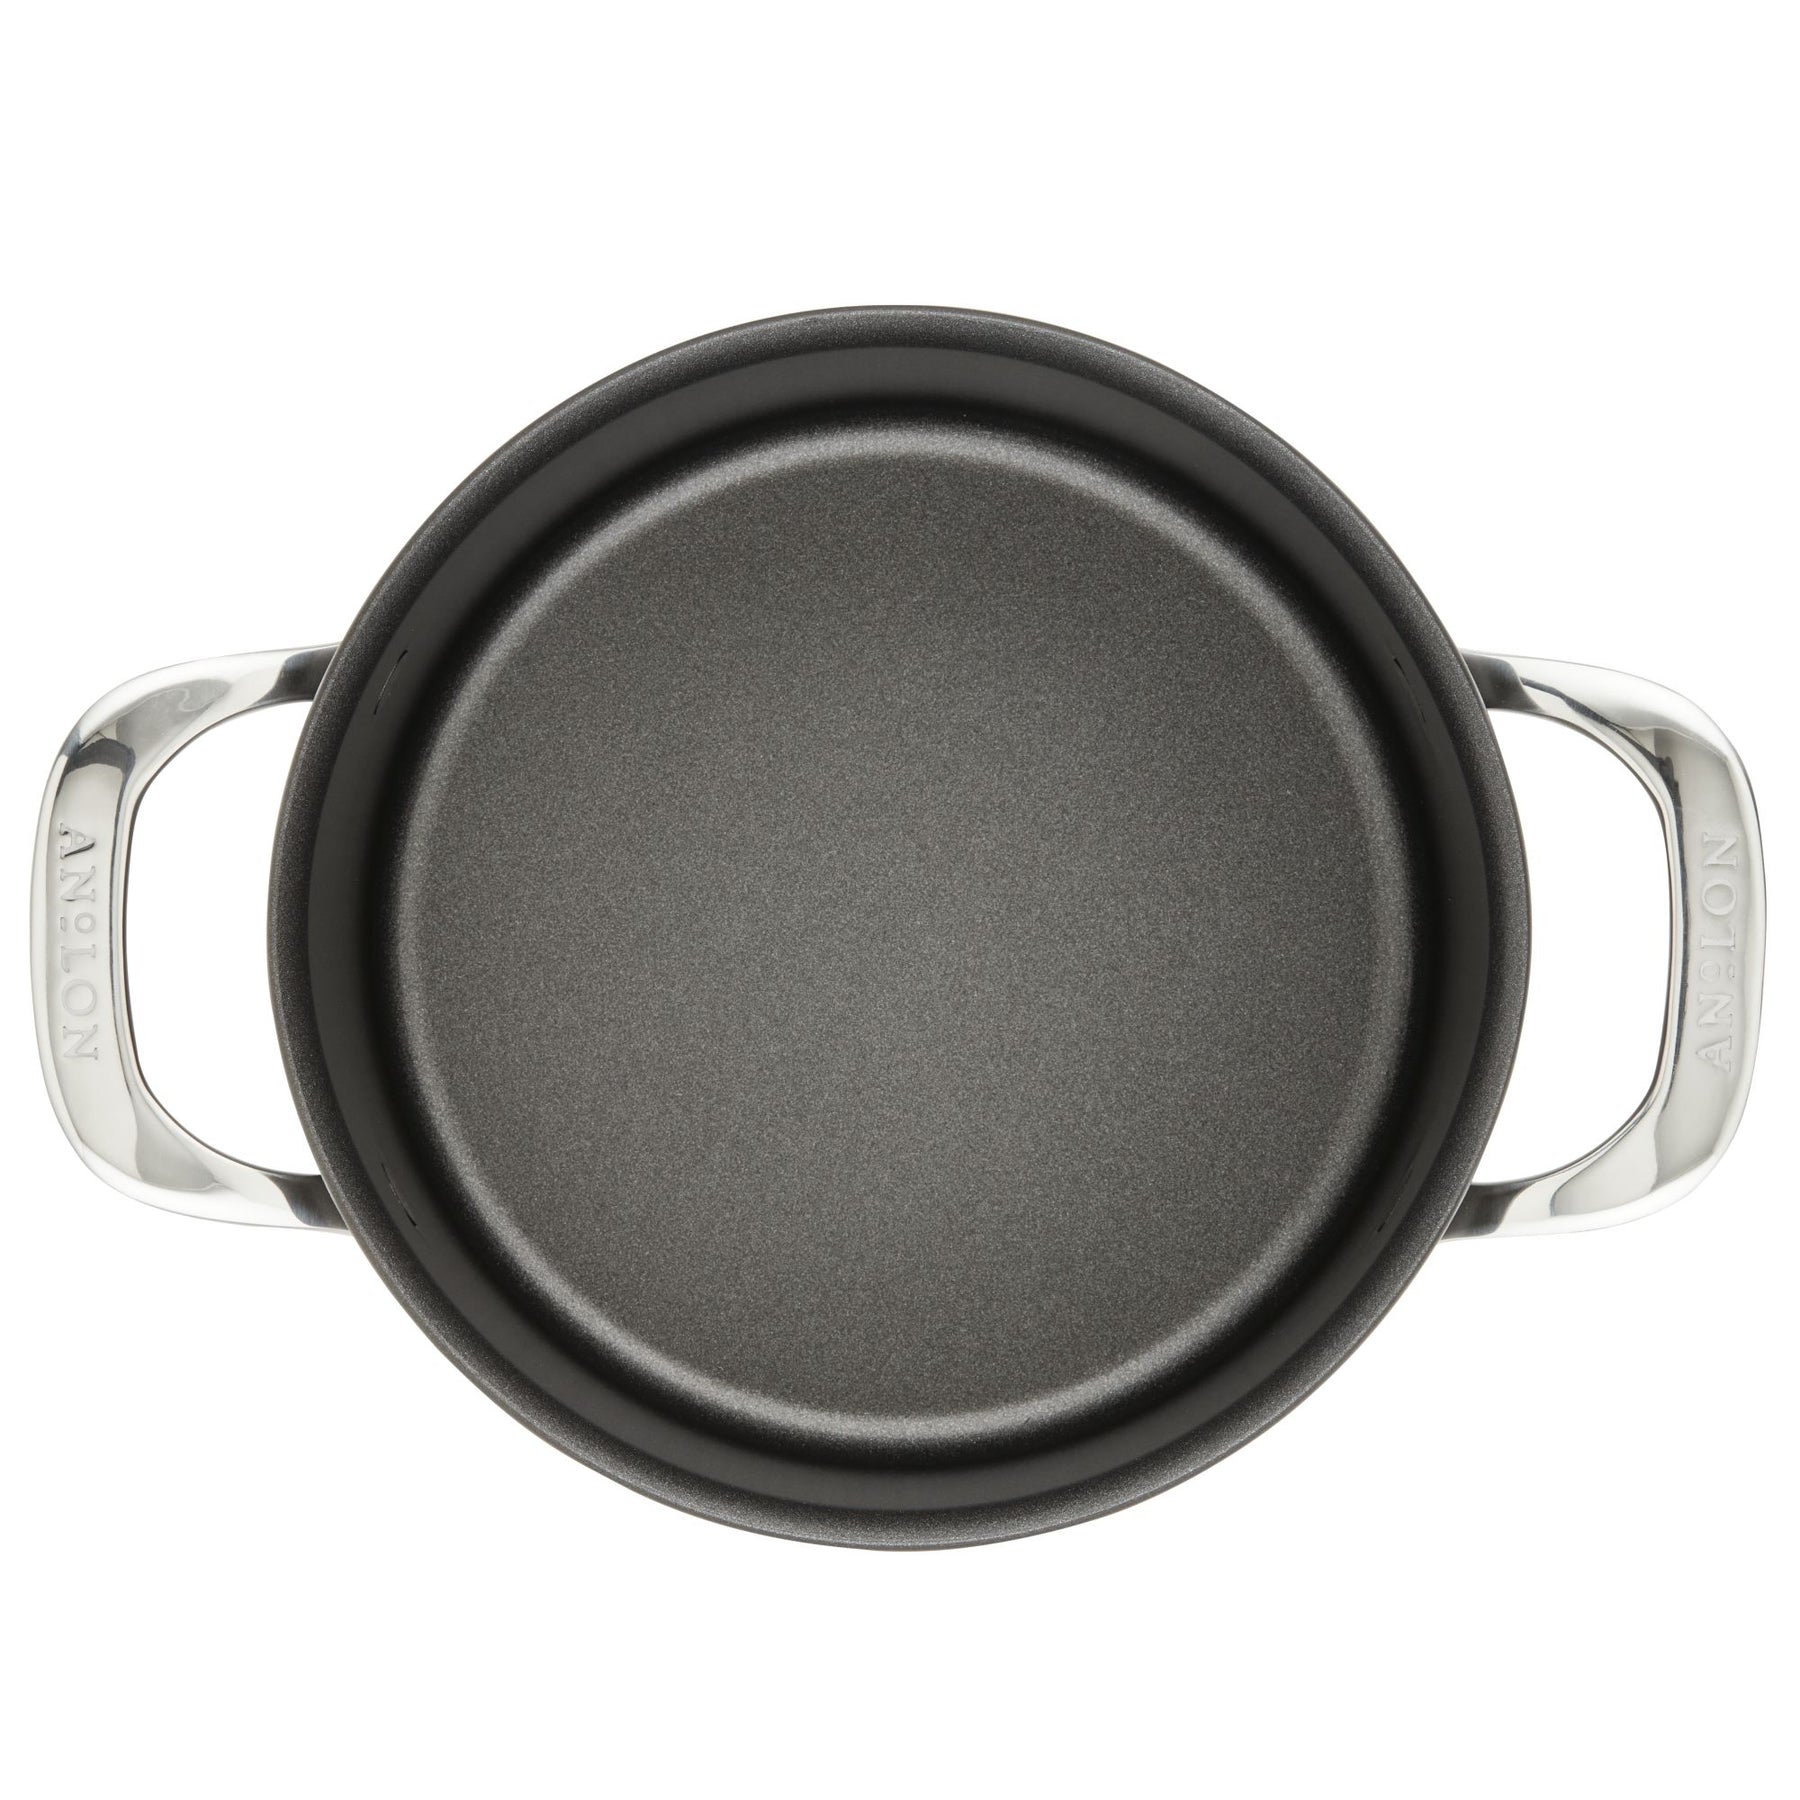  SODAY 4.3 QT Nonstick Pot Cookware, Black: Home & Kitchen